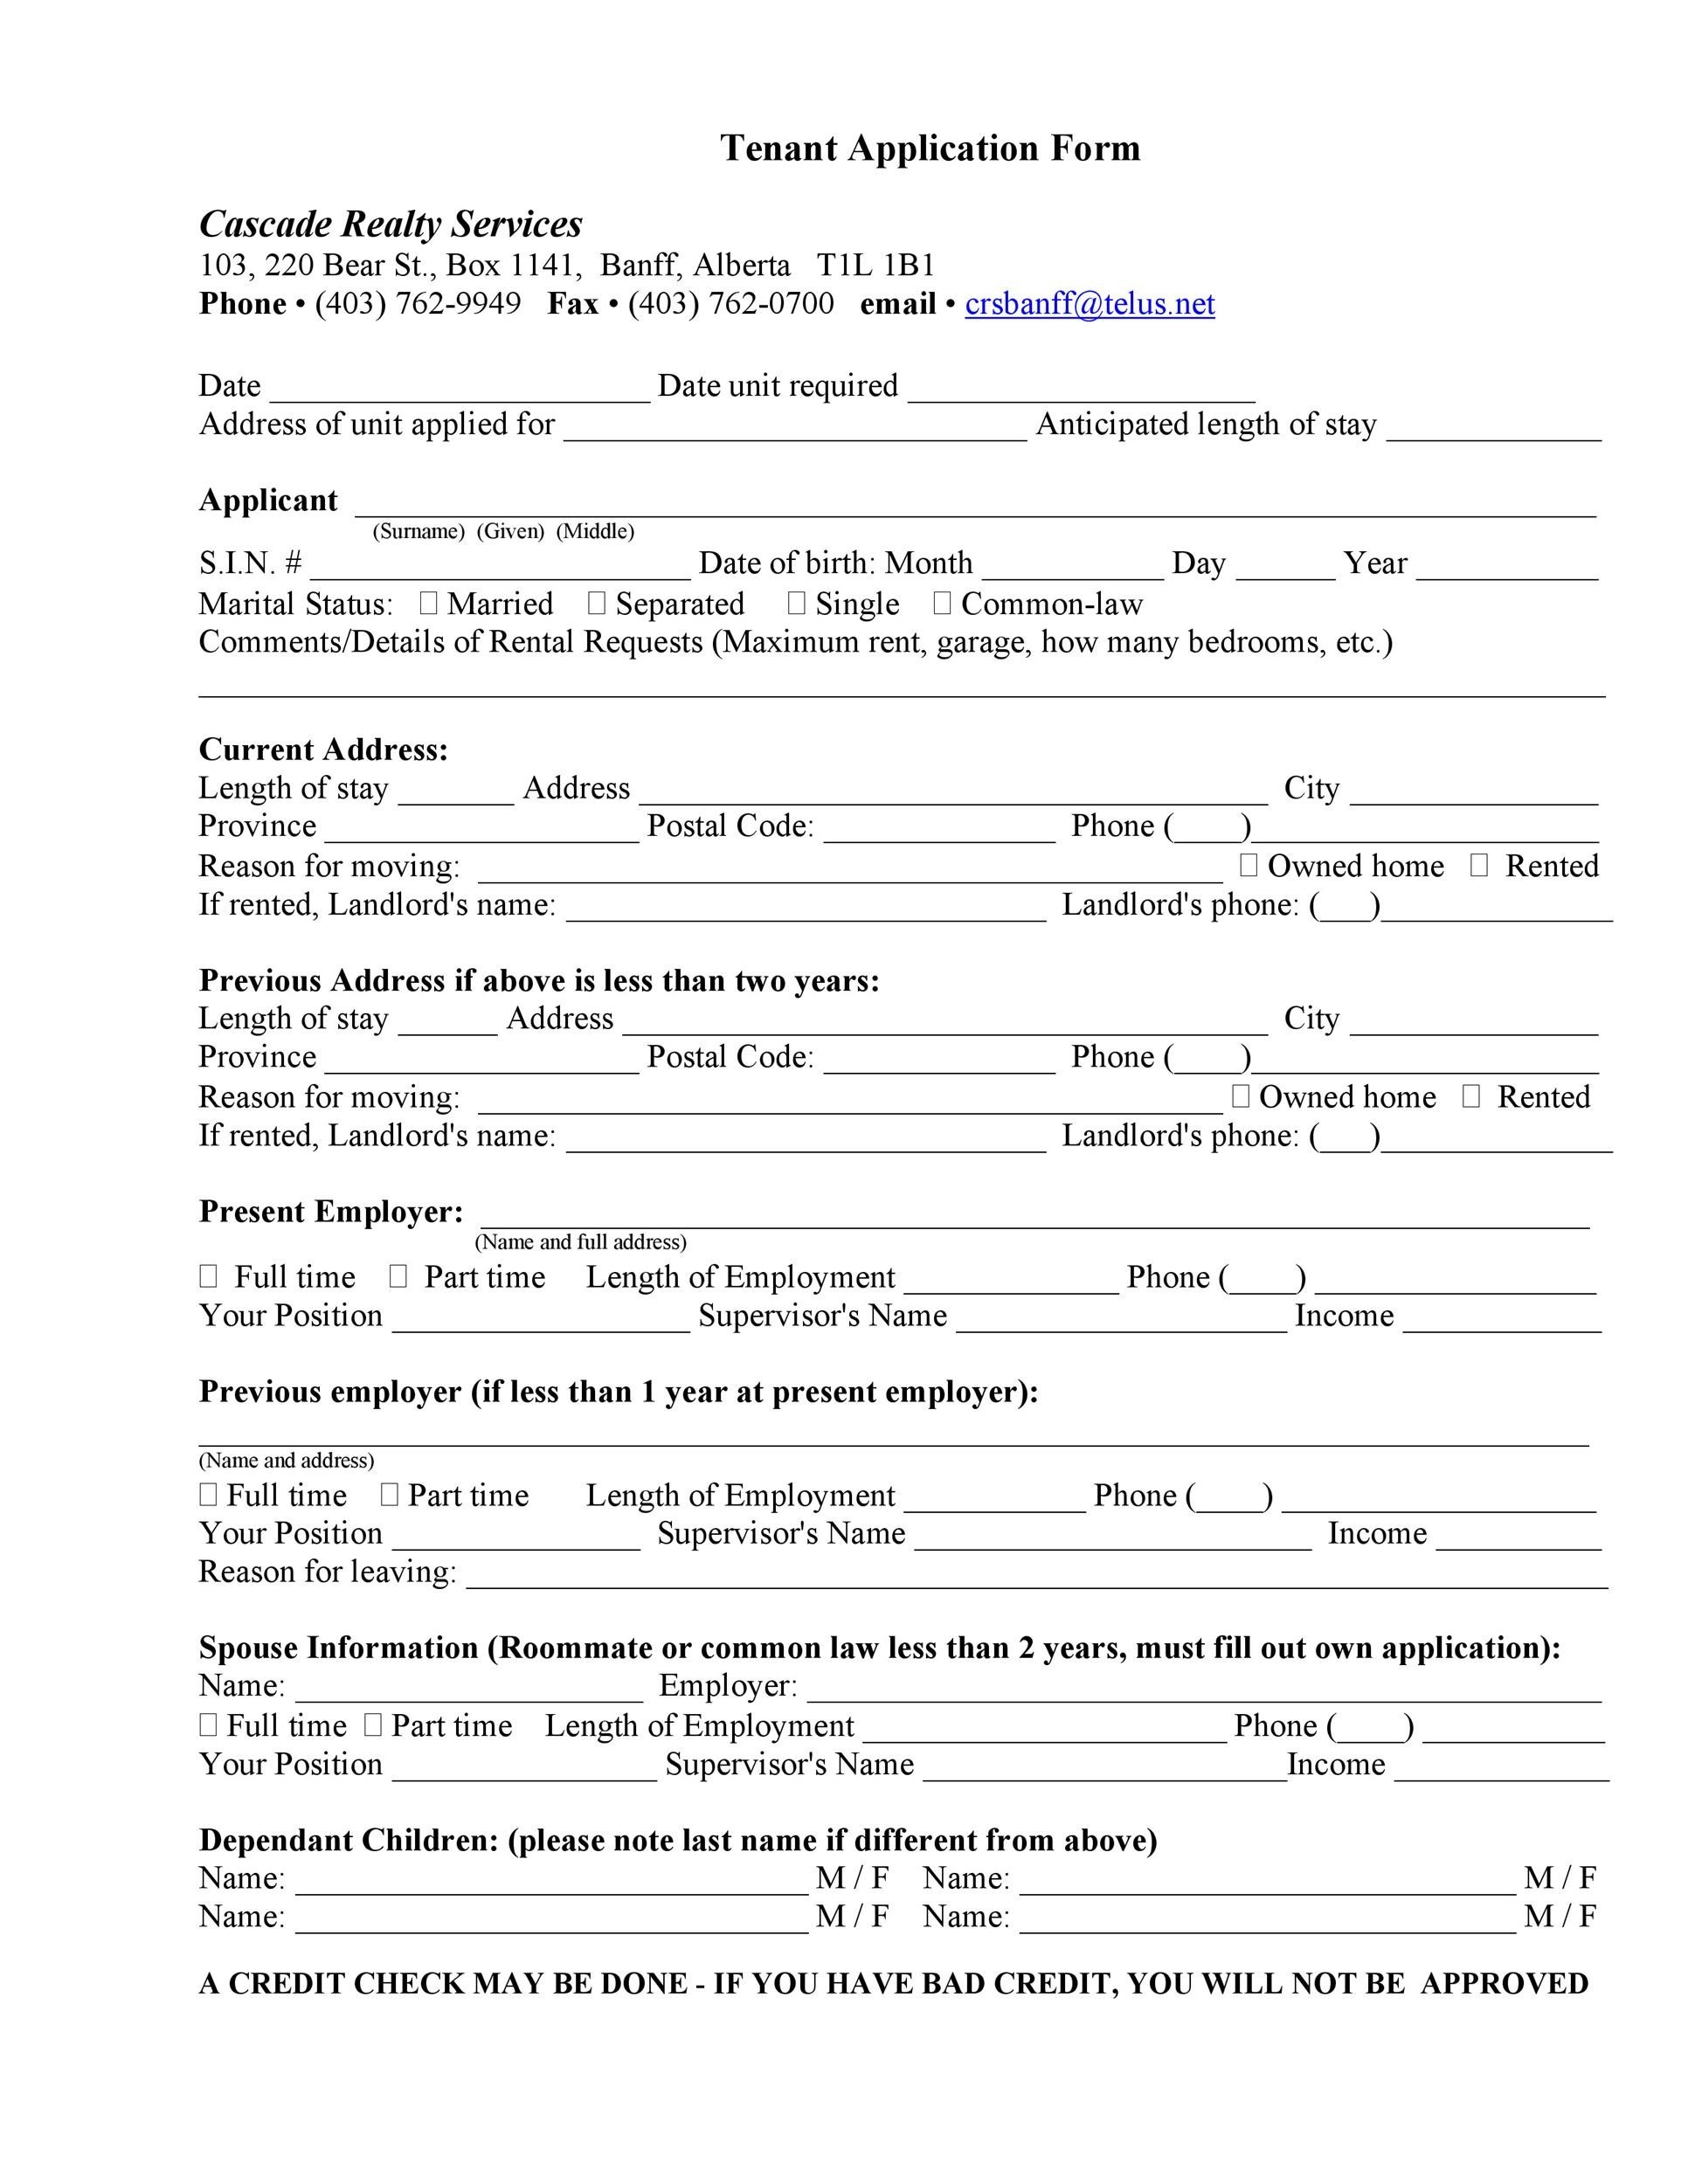 printable-simple-rental-application-form-printable-forms-free-online